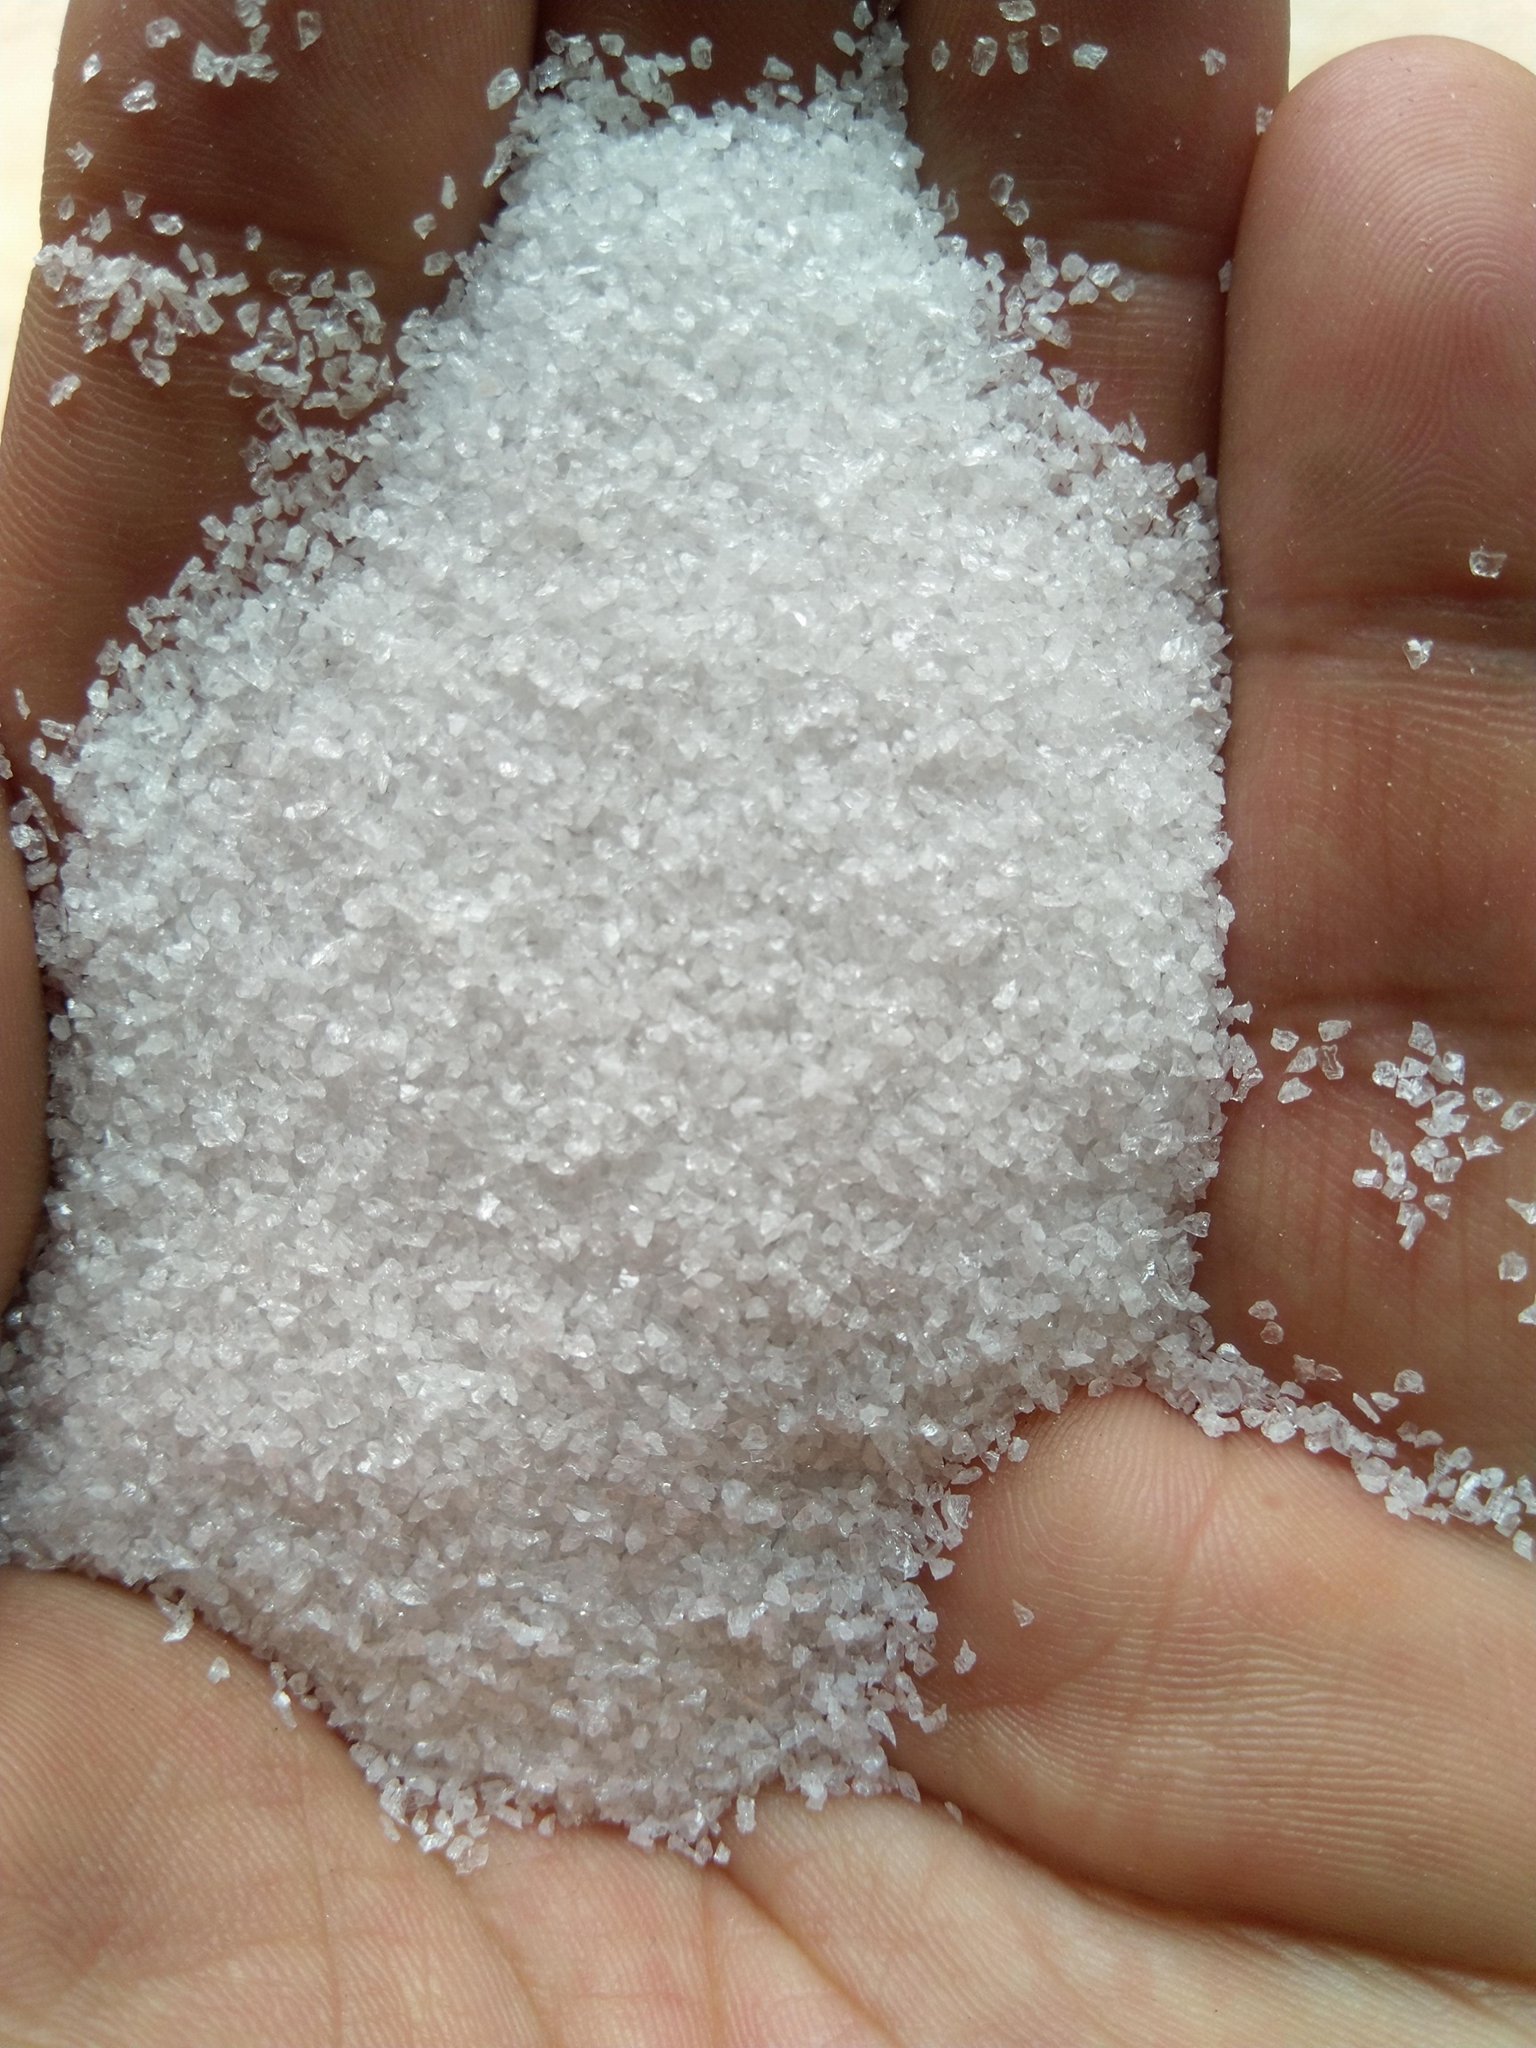  Shineline Abrasives white fused aluminum oxide 1-3MM powder for refractory 3